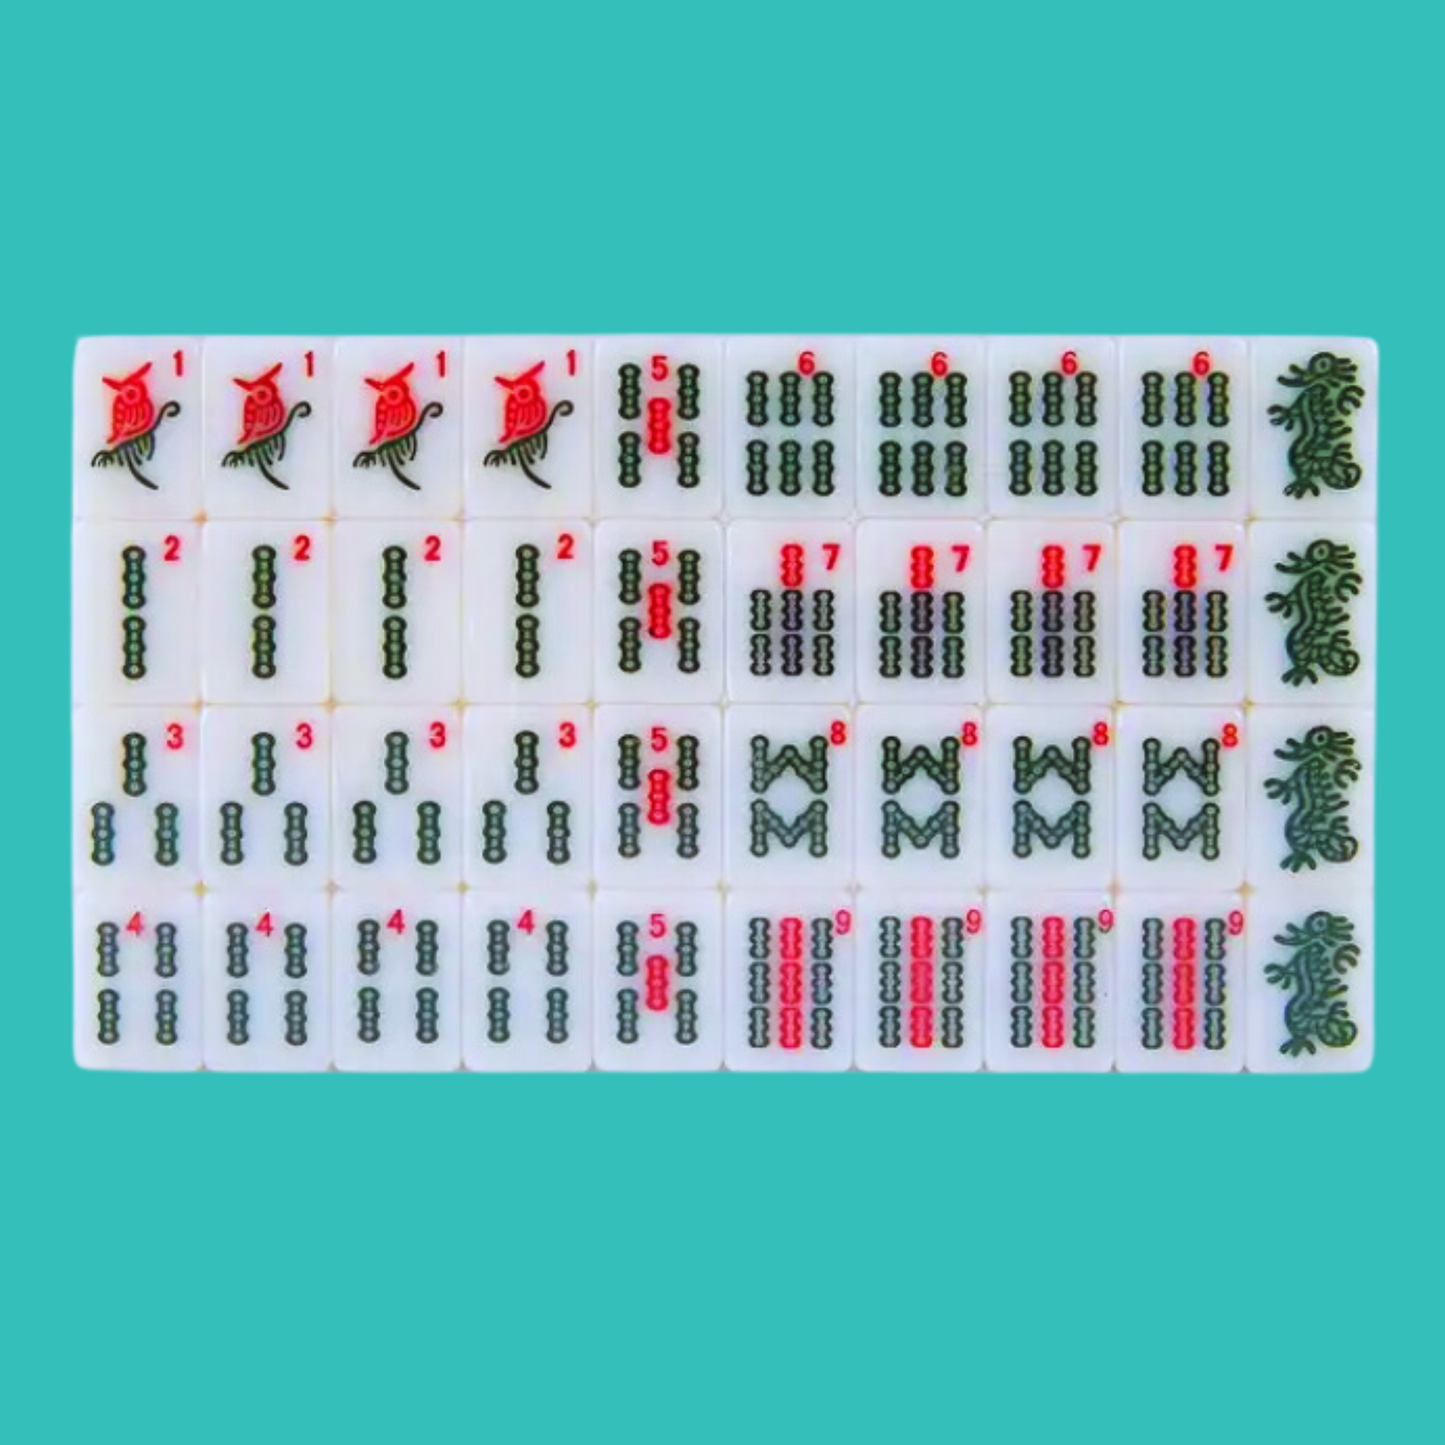 Mahjong Traditional Mini American Series Travel American Mahjongg Tile Set of 166 melamine white tiles, bright pink and teal bag, custom instruction and tips card, 2 colorful dice- Bam Bamboo Green Dragon Tiles